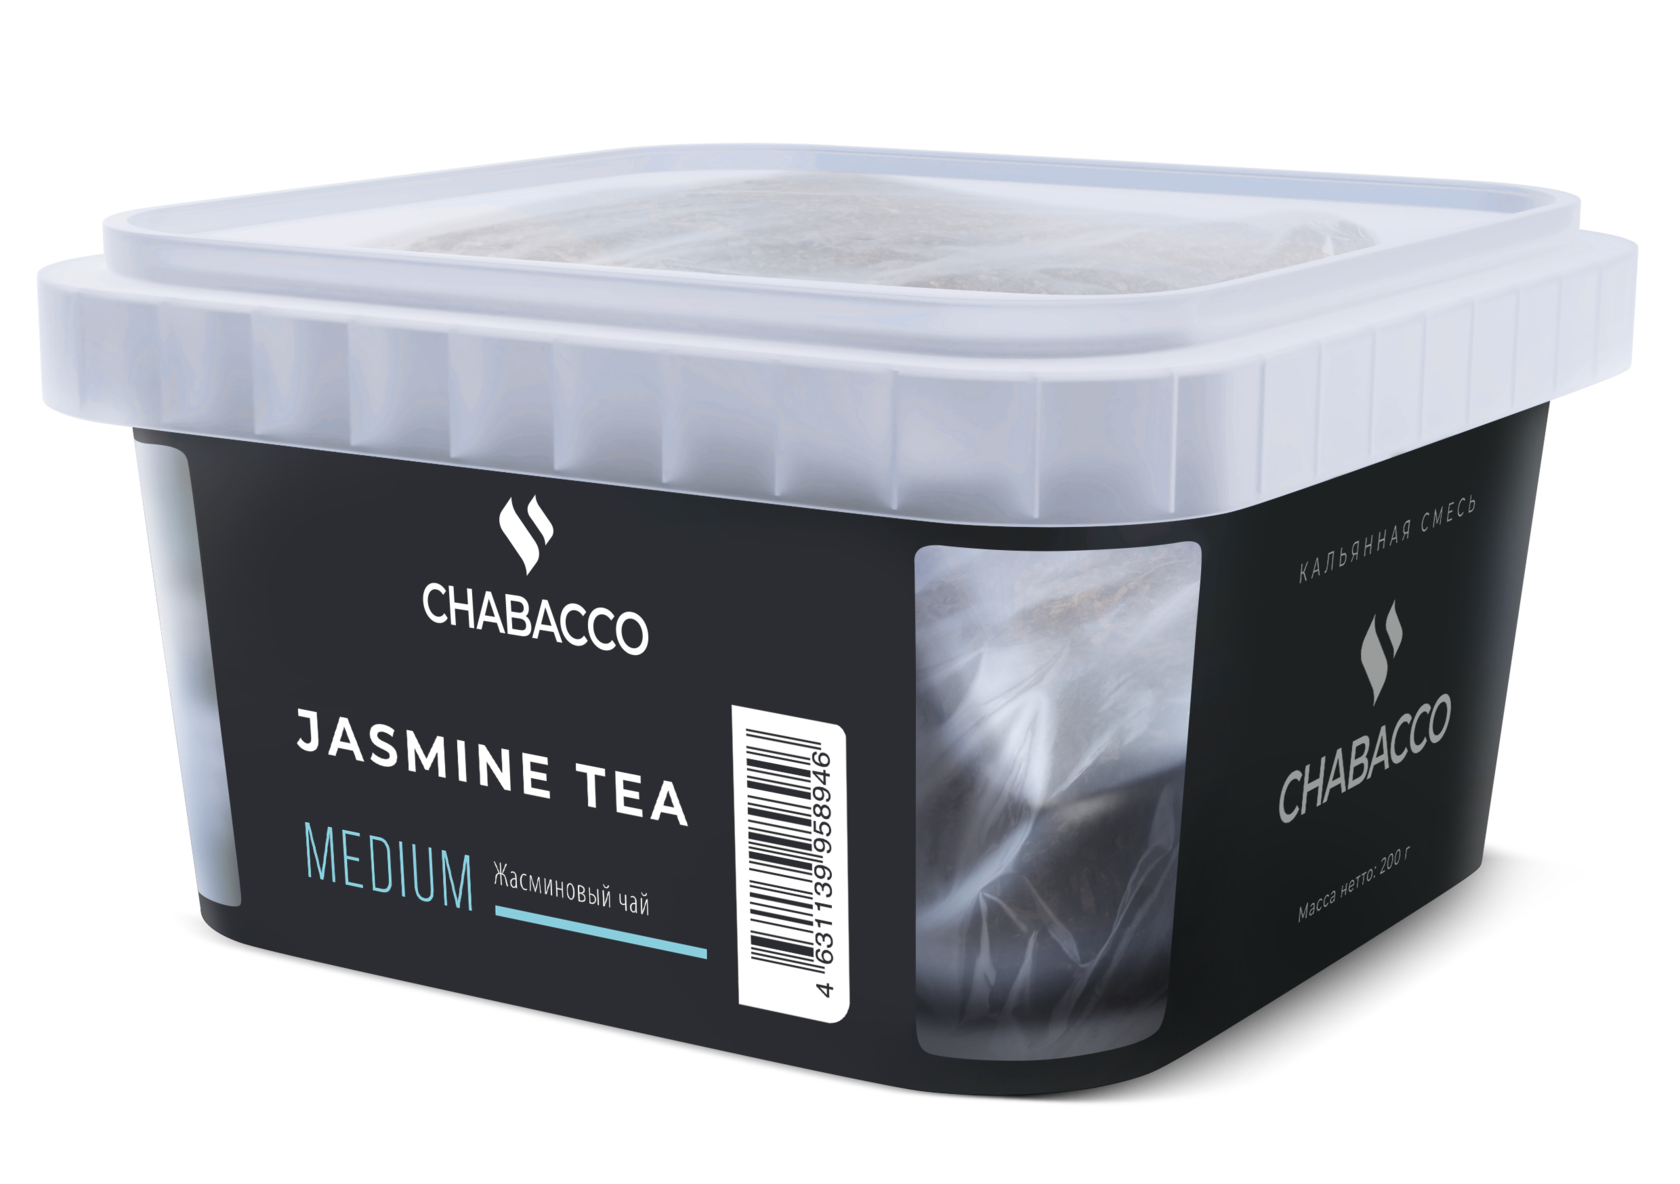 Chabacco - Medium - JASMINE TEA - 200 g